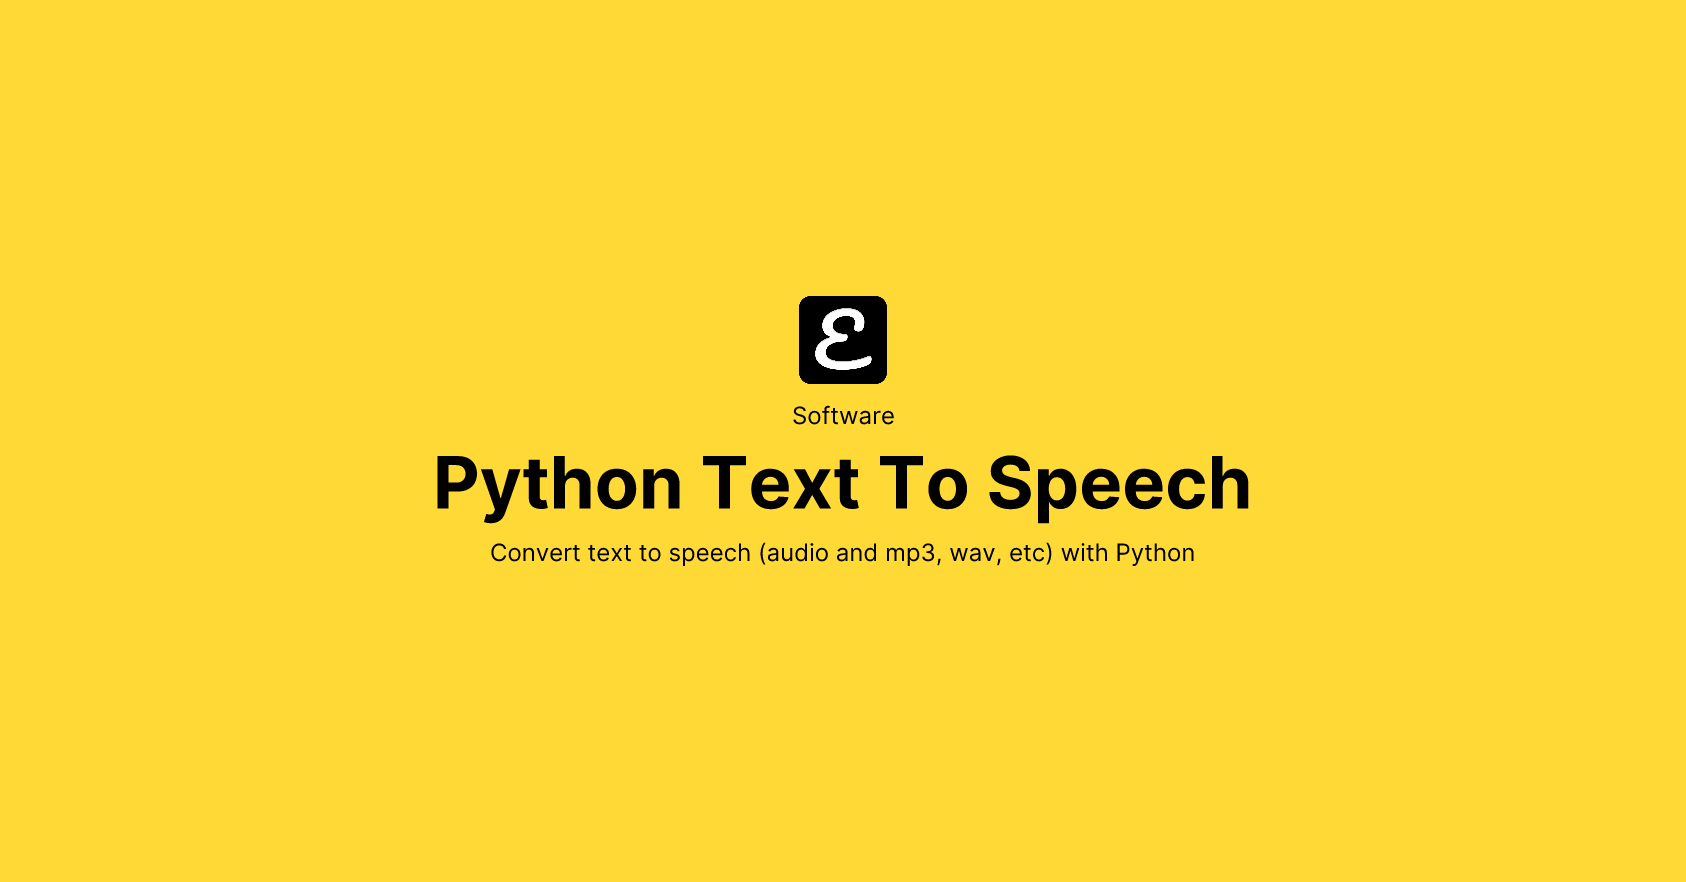 Python Text To Speech by Eric David Smith